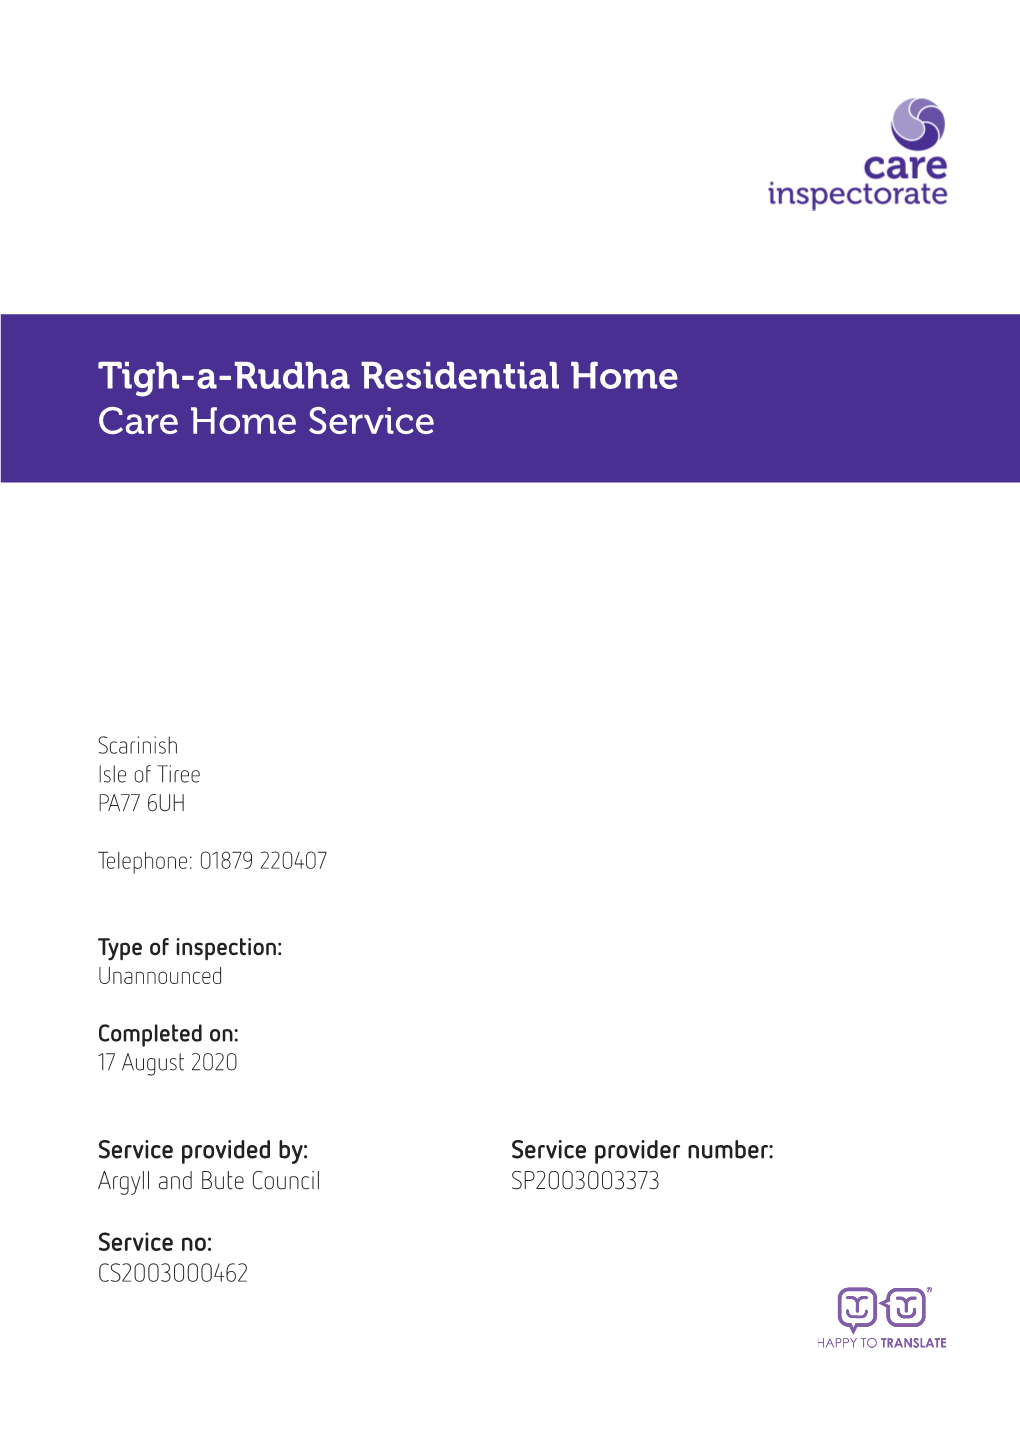 Tigh-A-Rudha Residential Home Care Home Service